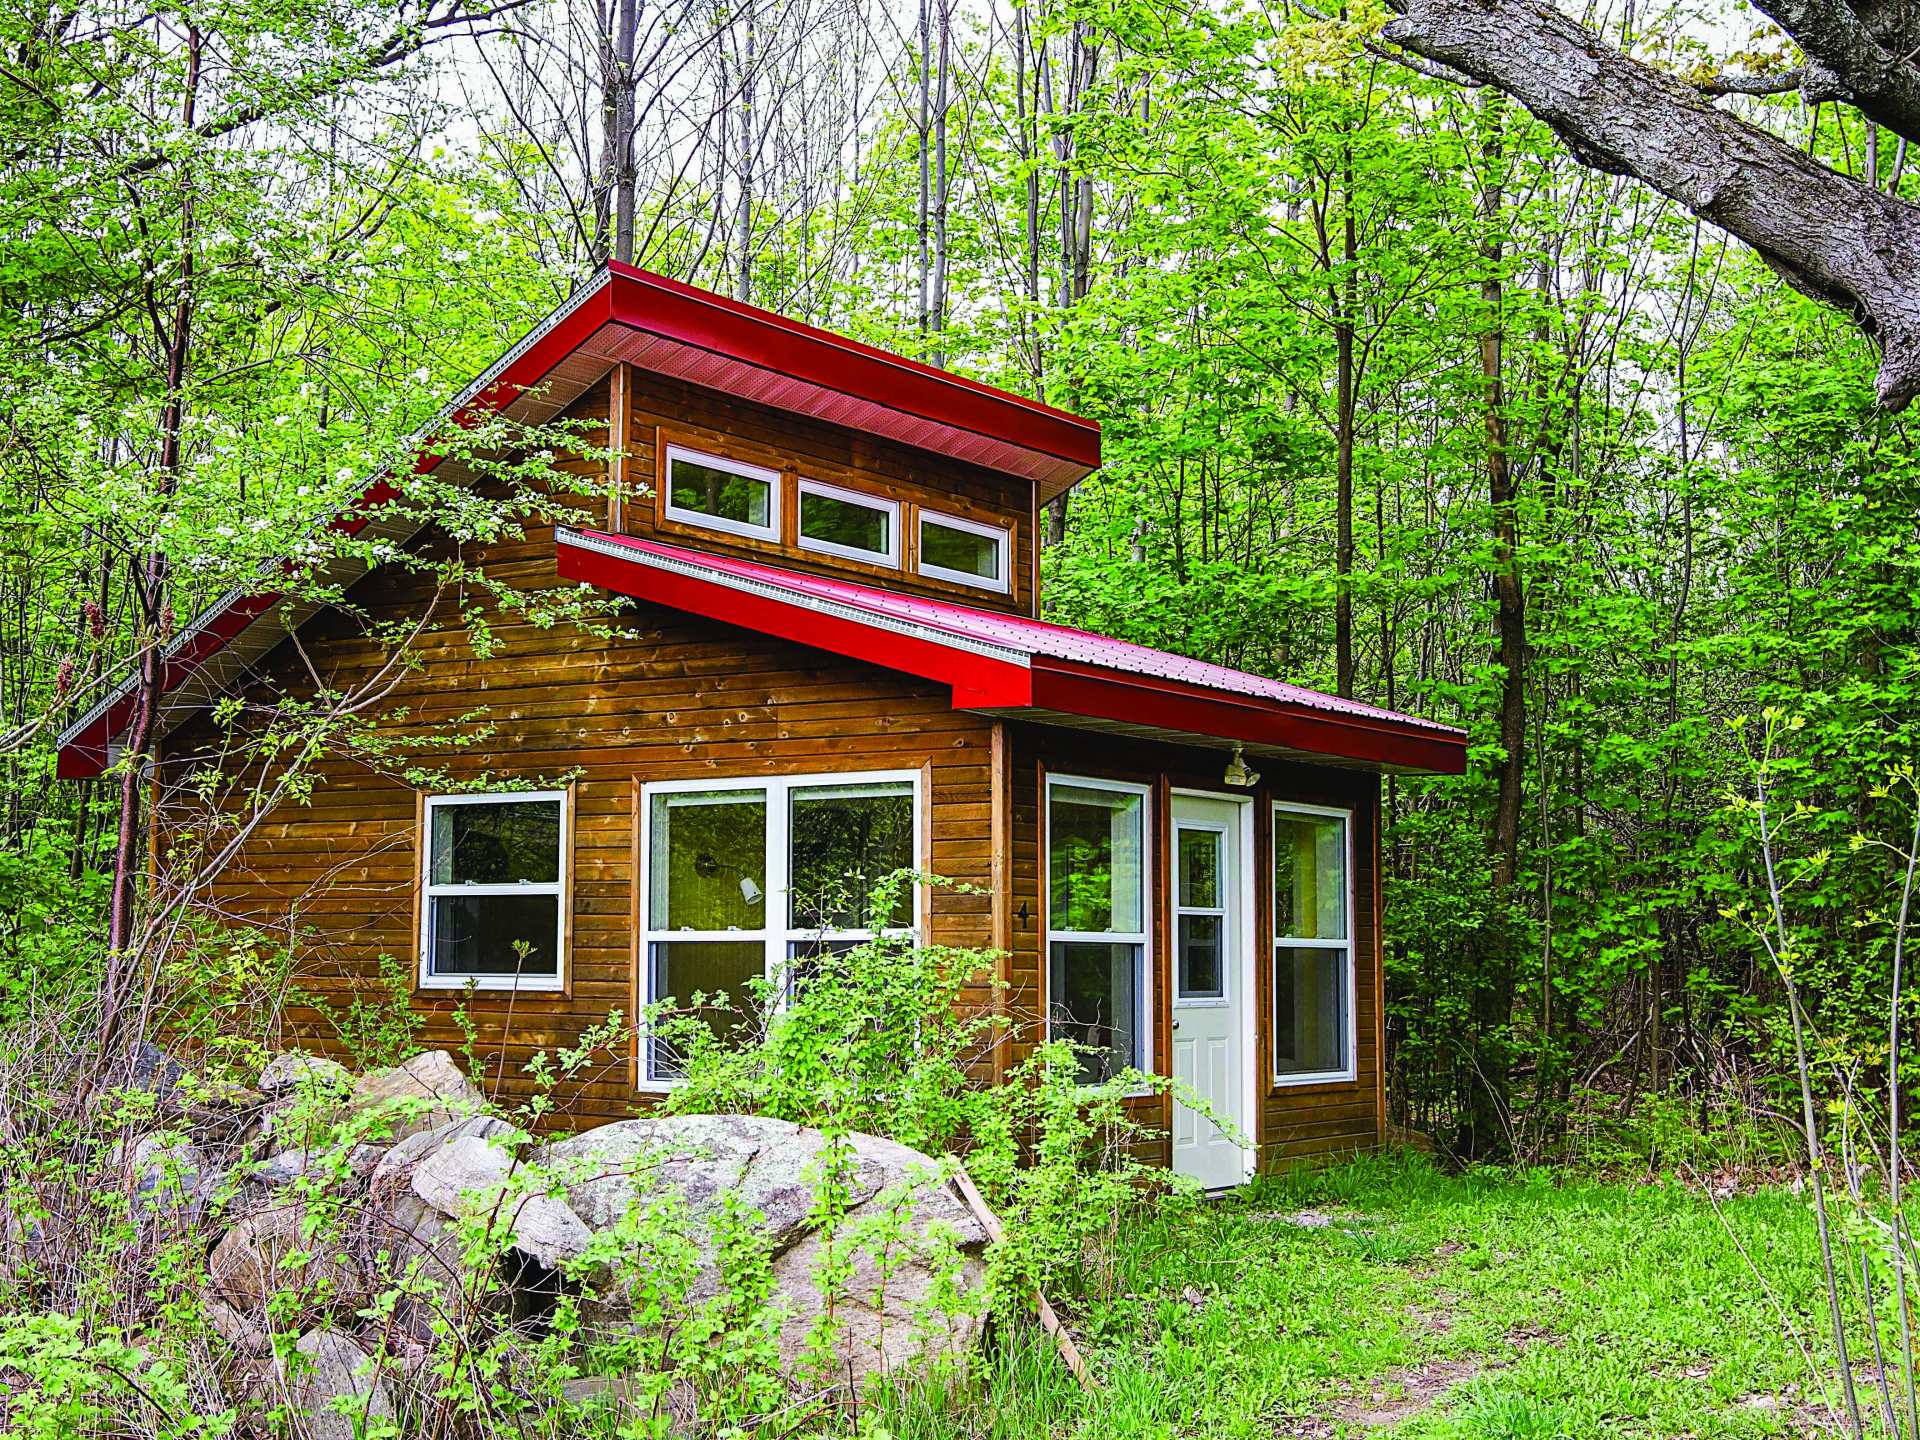 Best Ontario wellness retreats | Sugar Ridge Ontario wellness retreat cabin in the forest